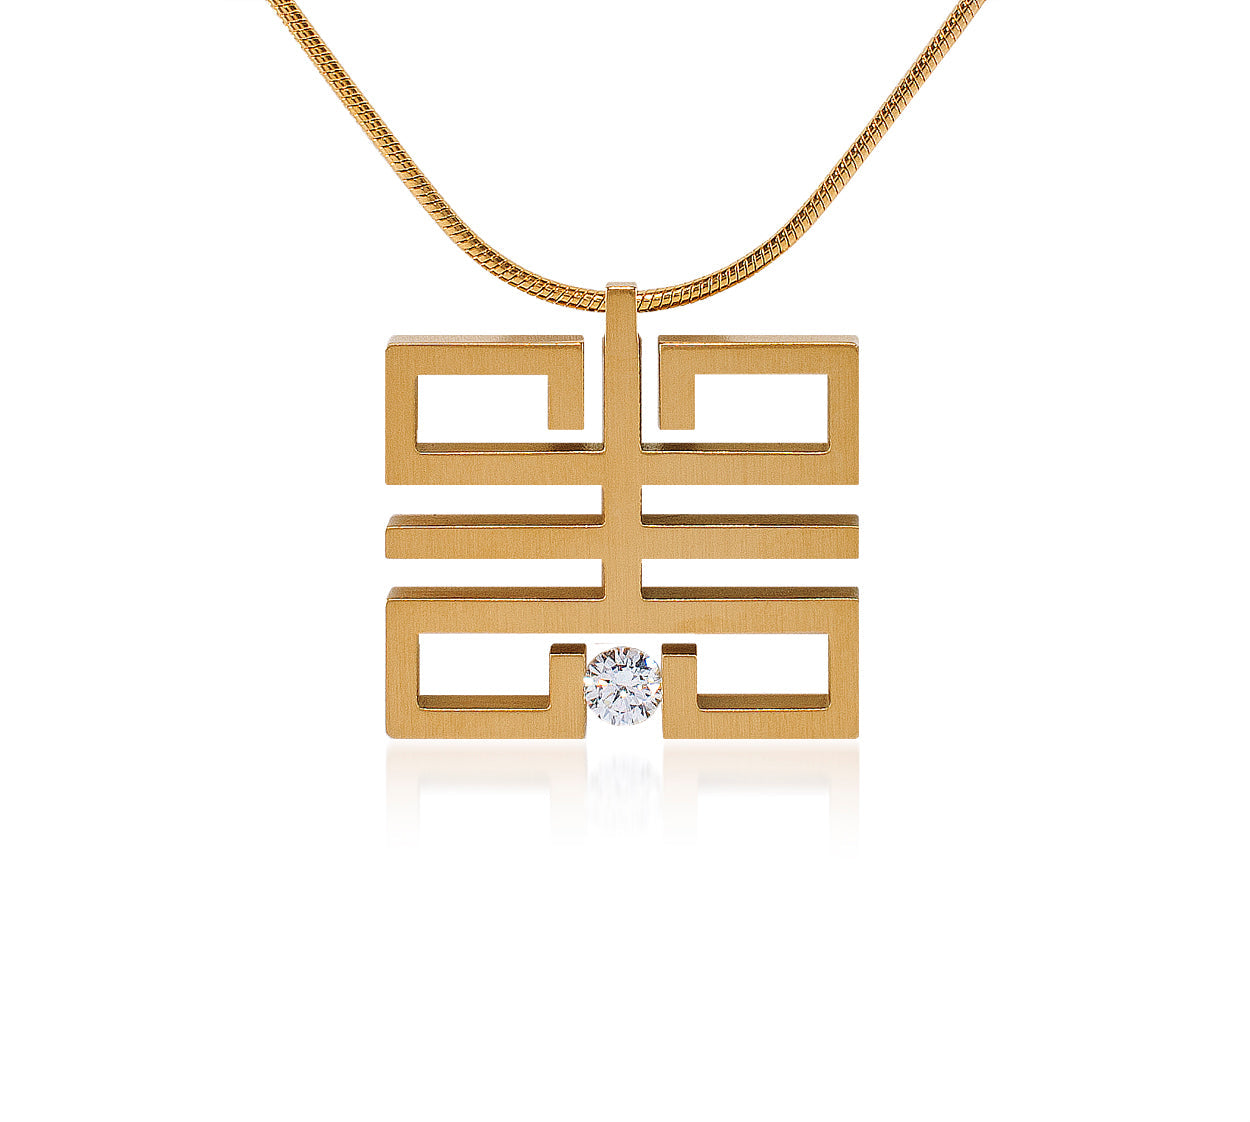 GIVENCHY Swarovski Pendant Necklace | Swarovski pendant necklace, Swarovski  pendant, Givenchy jewelry